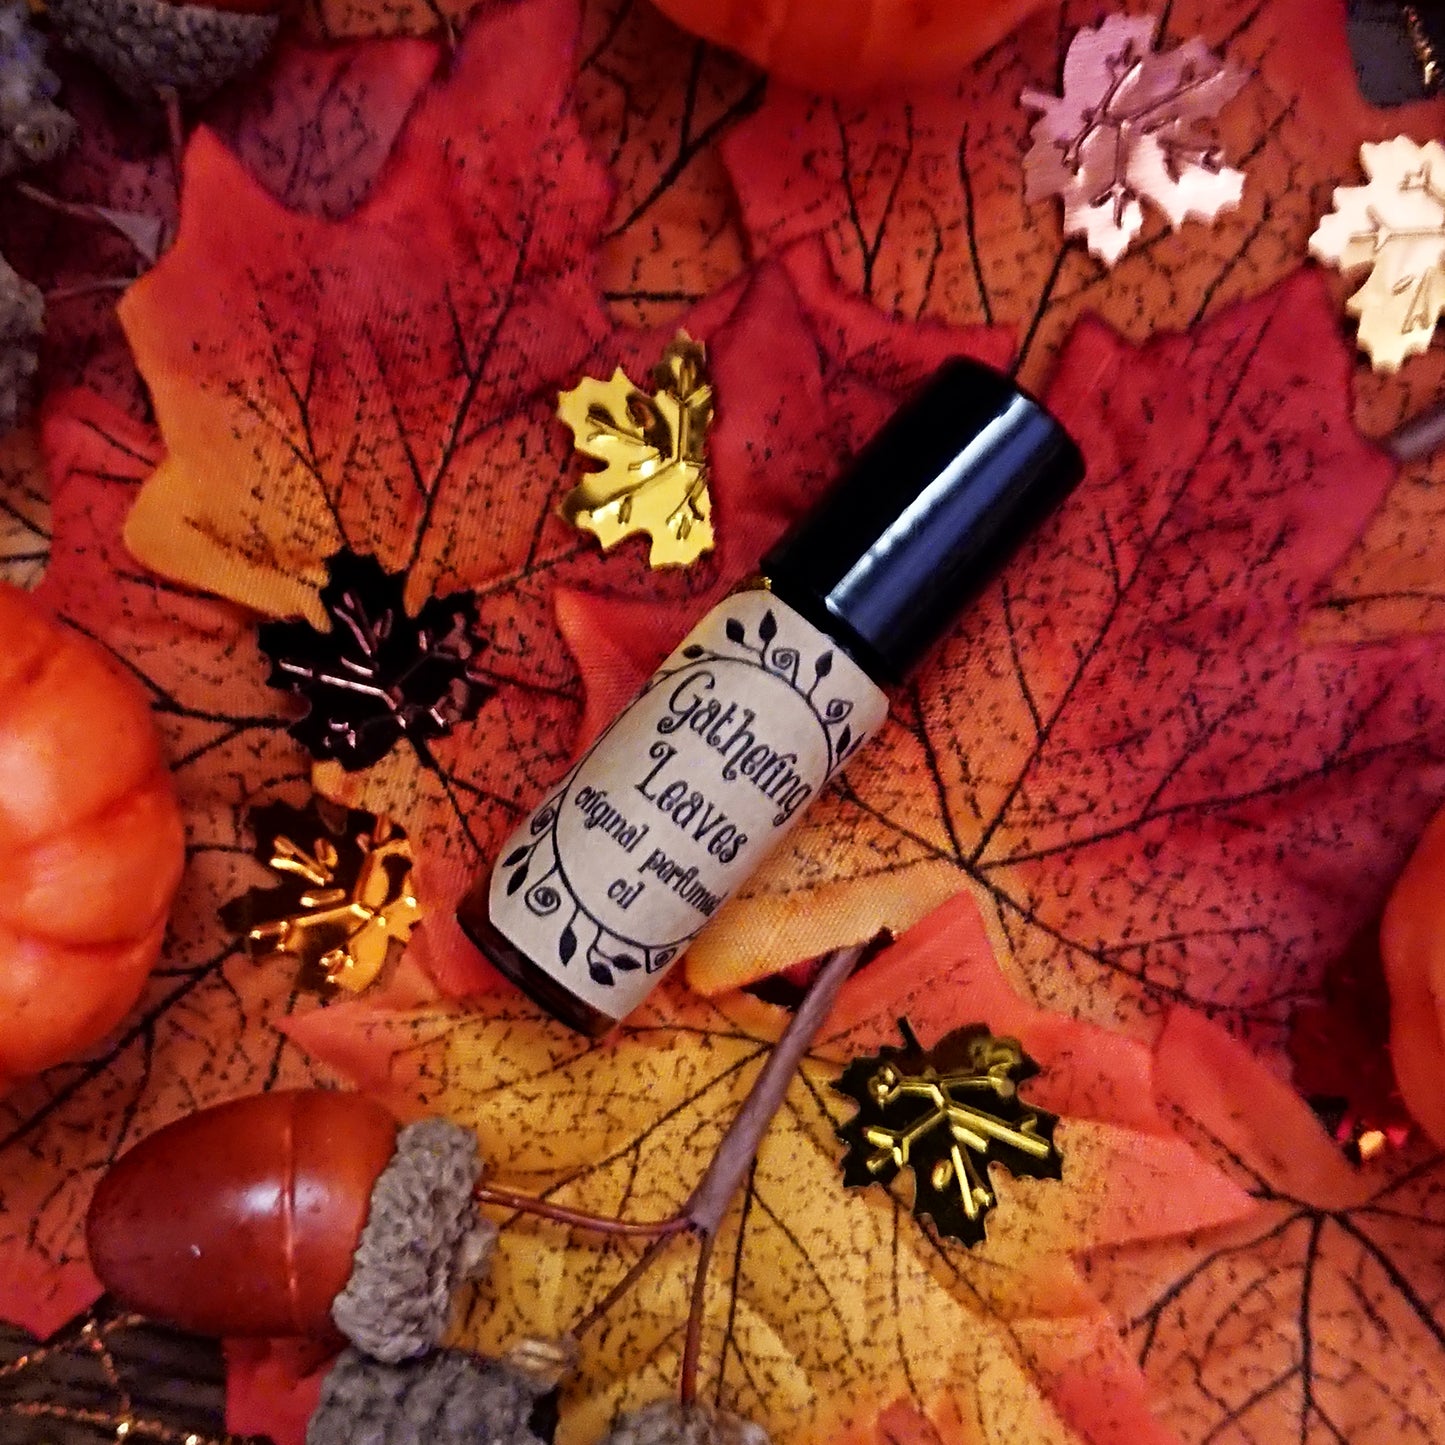 Gathering Leaves Original Perfumed Oil - Autumn Winter Cosy Autumn Leaves Roll On Fragrance - Roasted Chestnut Coffee & Vetiver Vegan Oil Blend